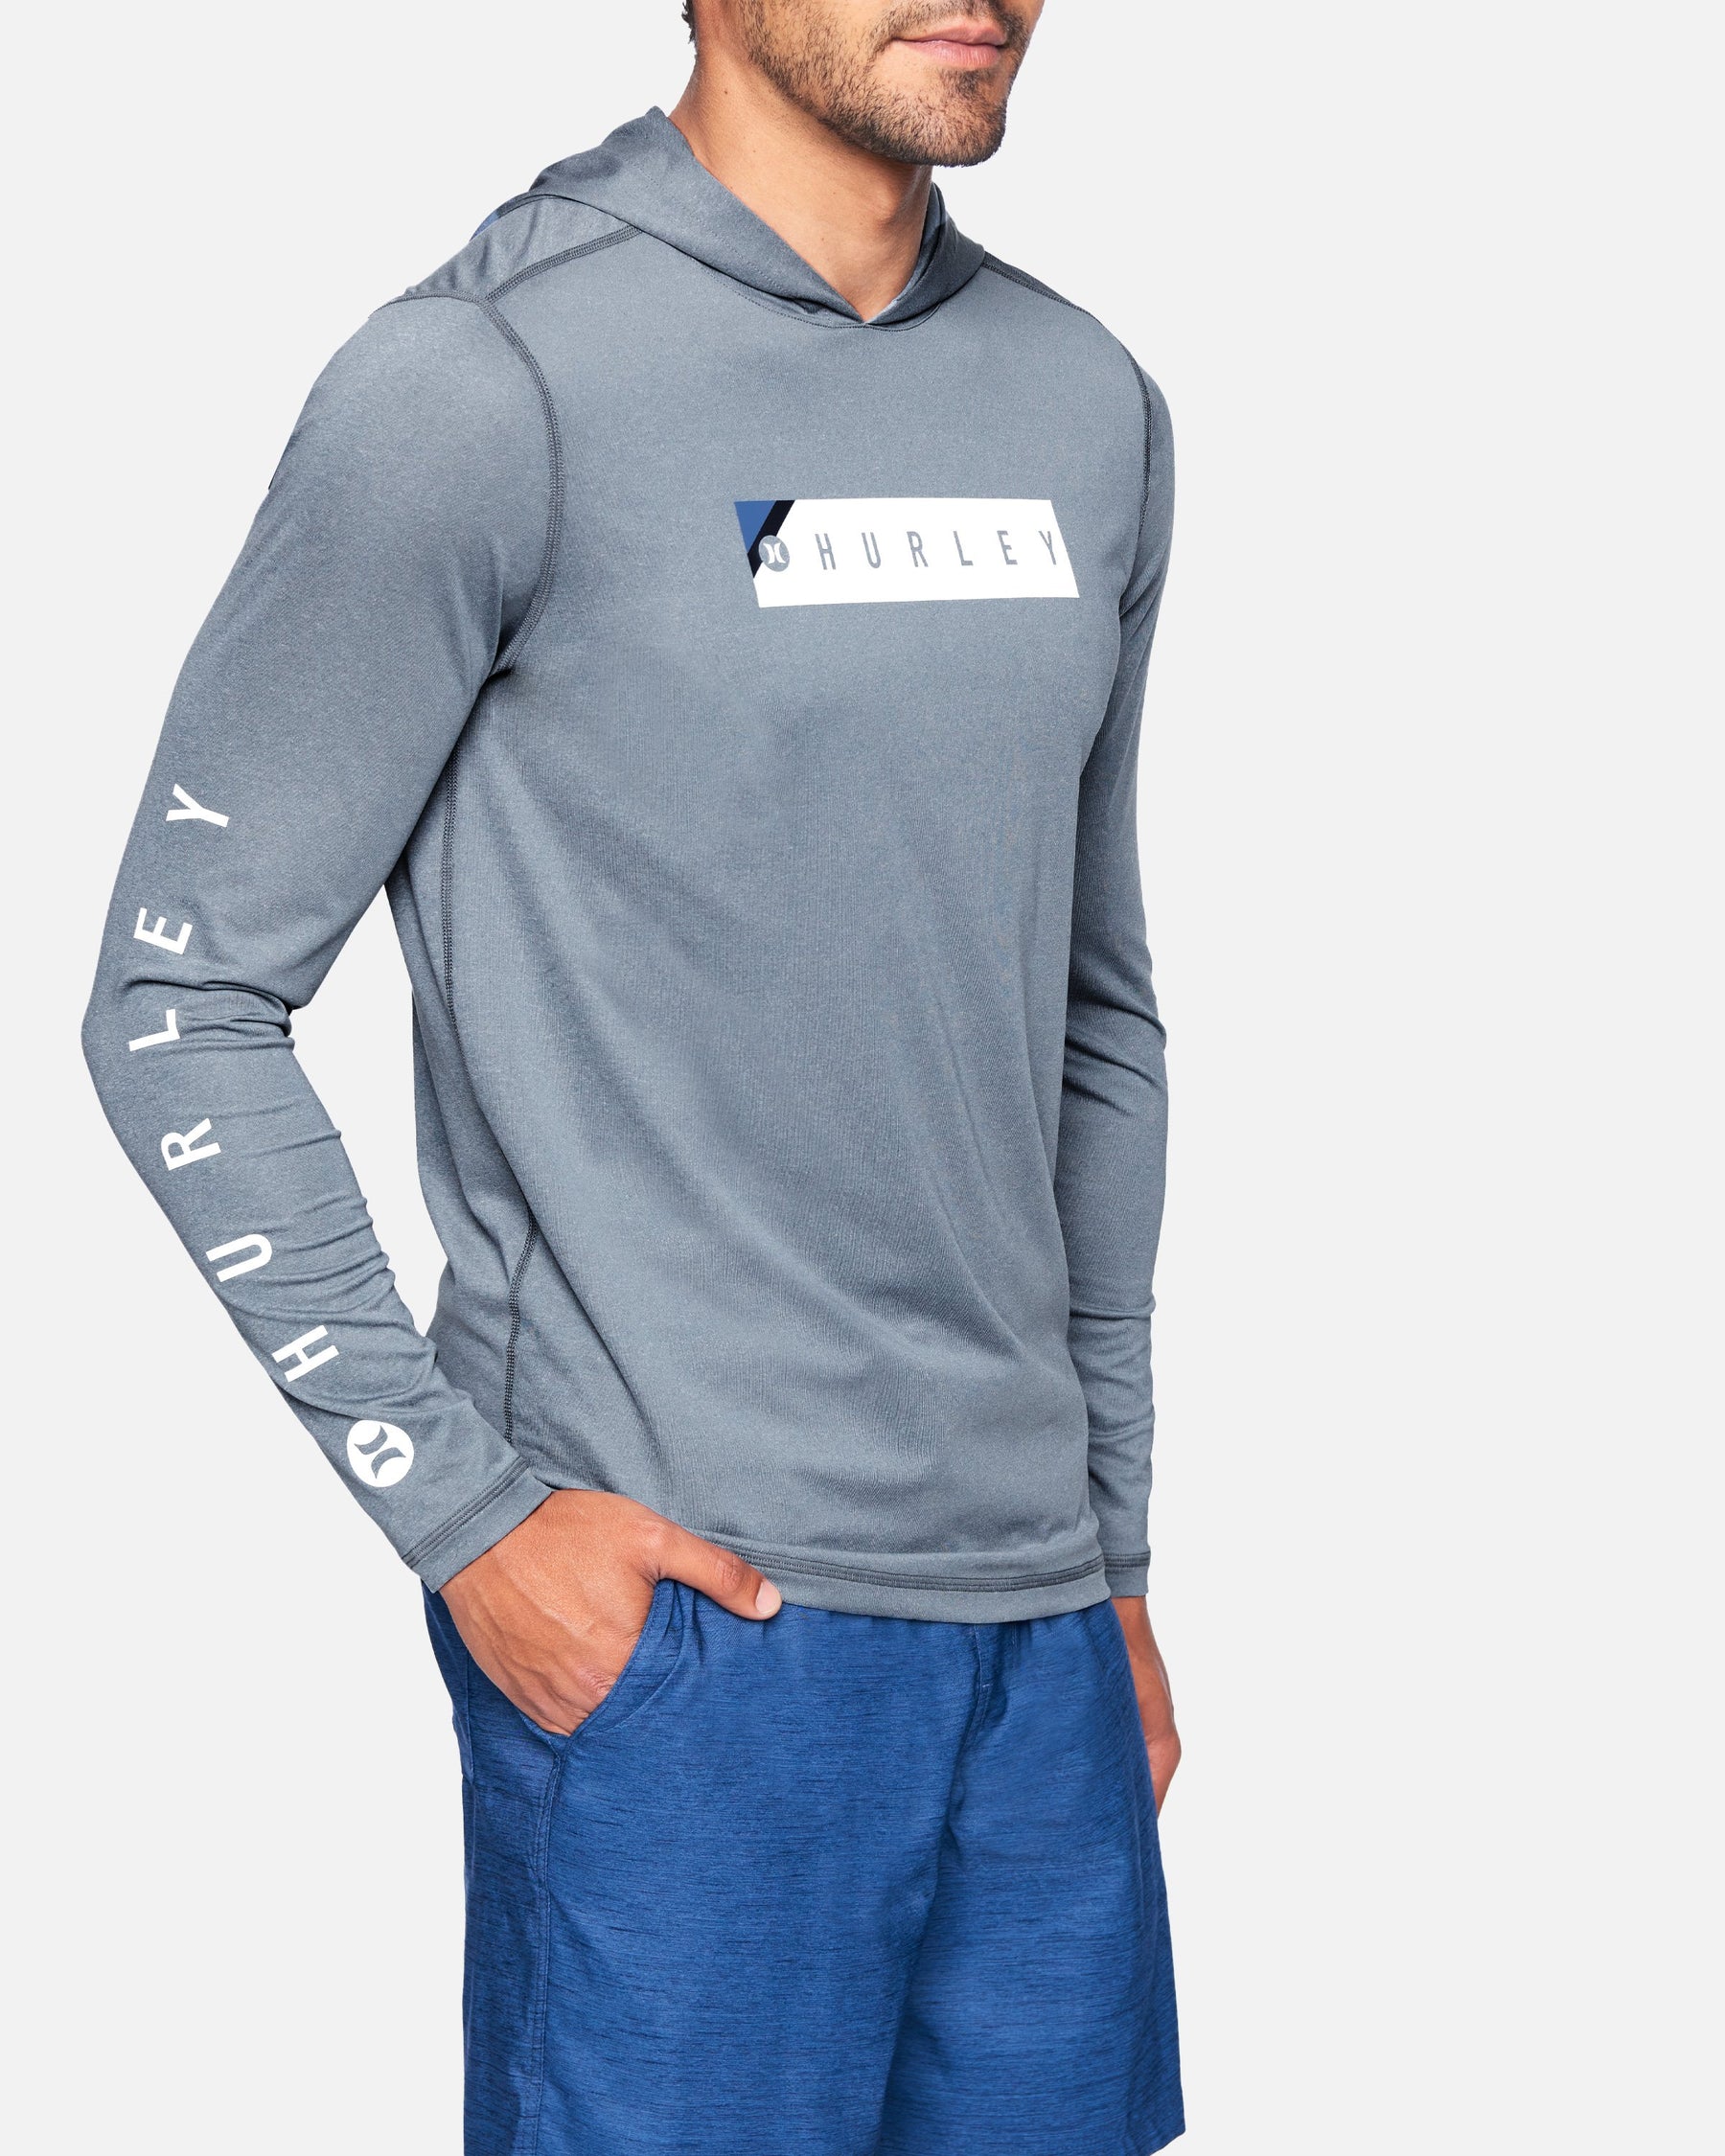 Barred Hybrid UPF Long Sleeve Hooded Shirt (Cool Grey)